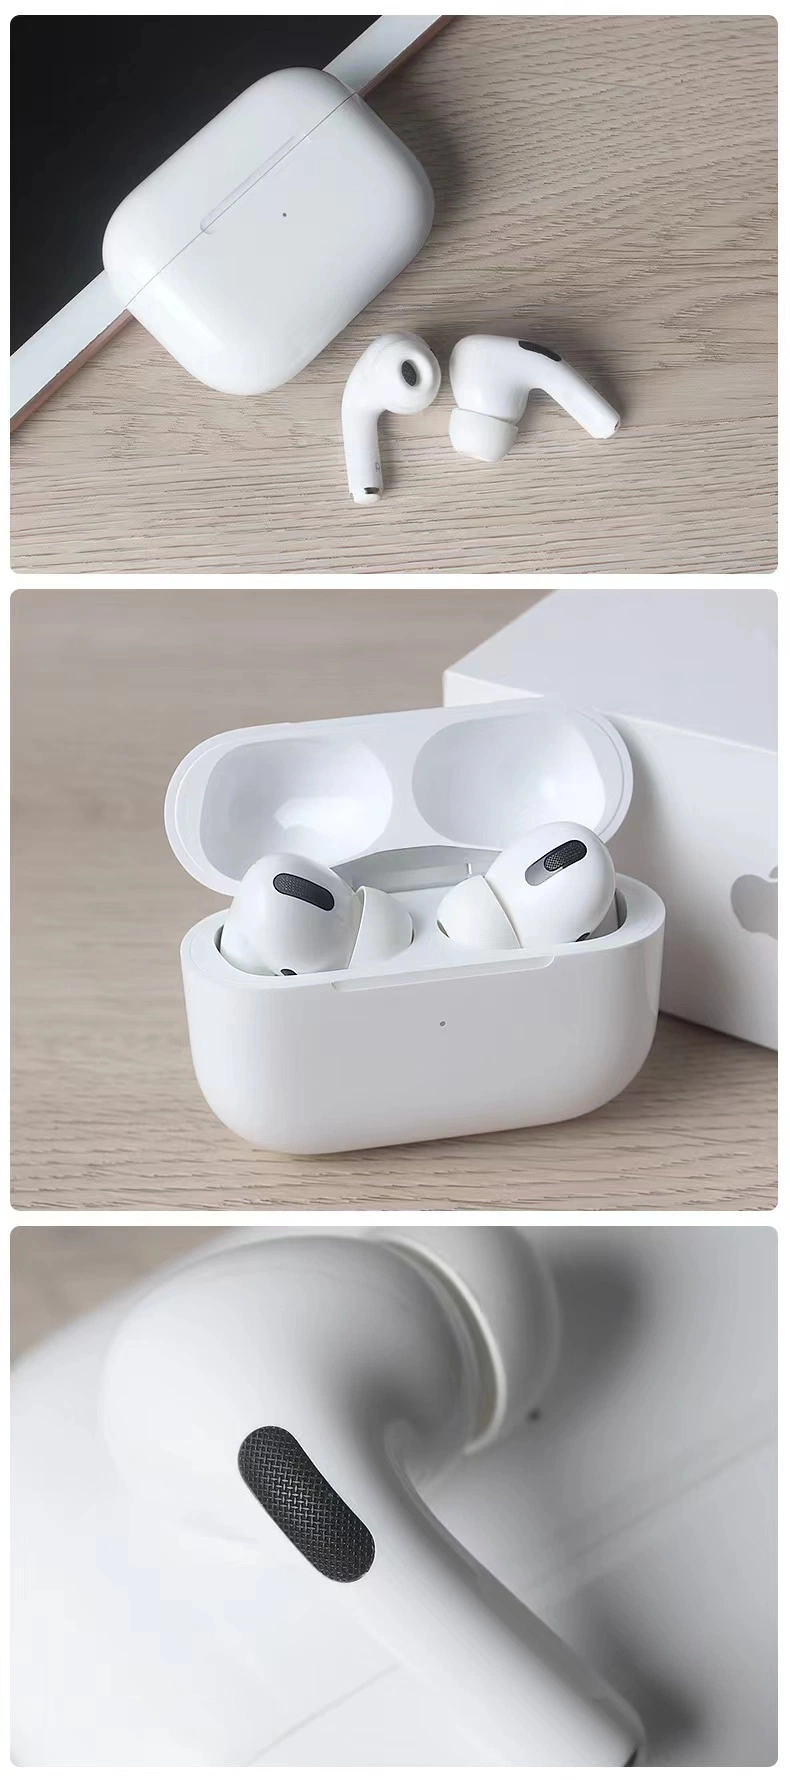 Hot Brand Airpods PRO Fashion Bluetooth Headphones Wireless Earphone